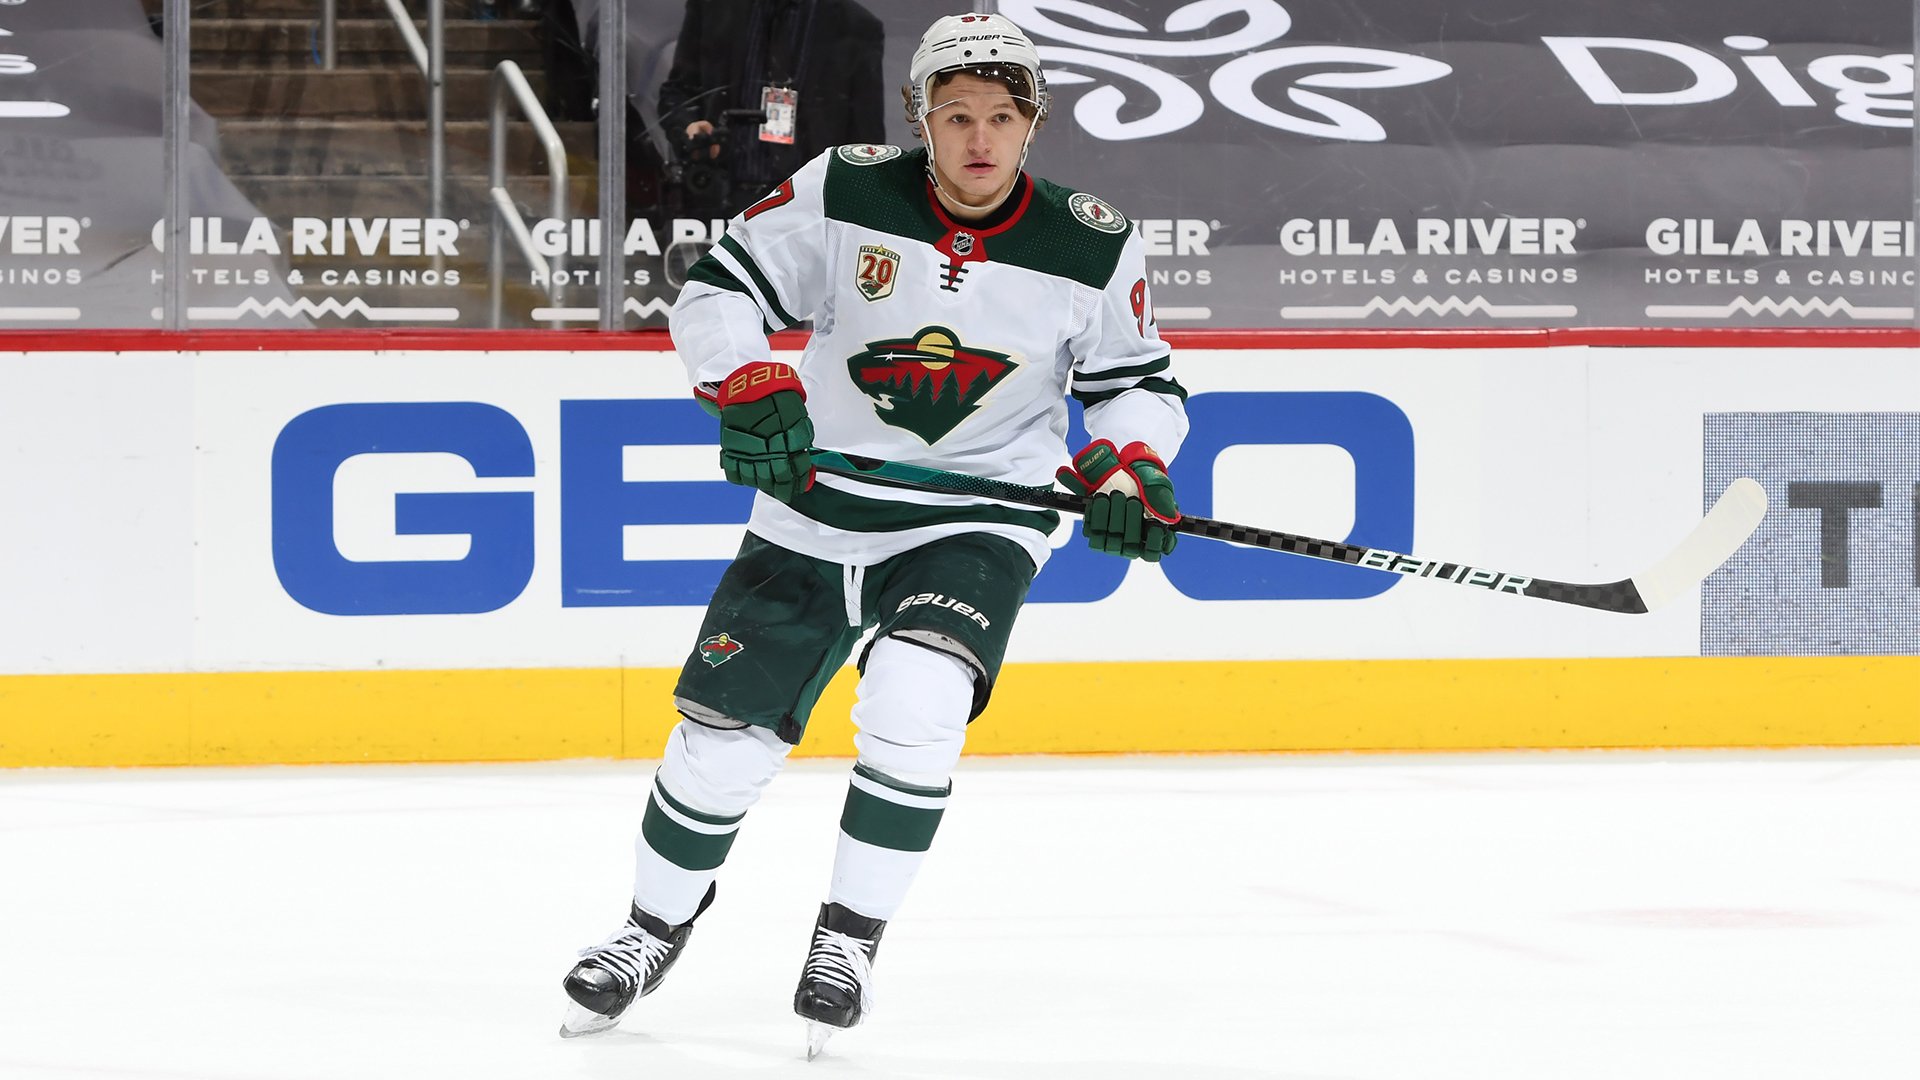 Kirill Kaprizov's journey to NHL with Minnesota Wild began in Russia